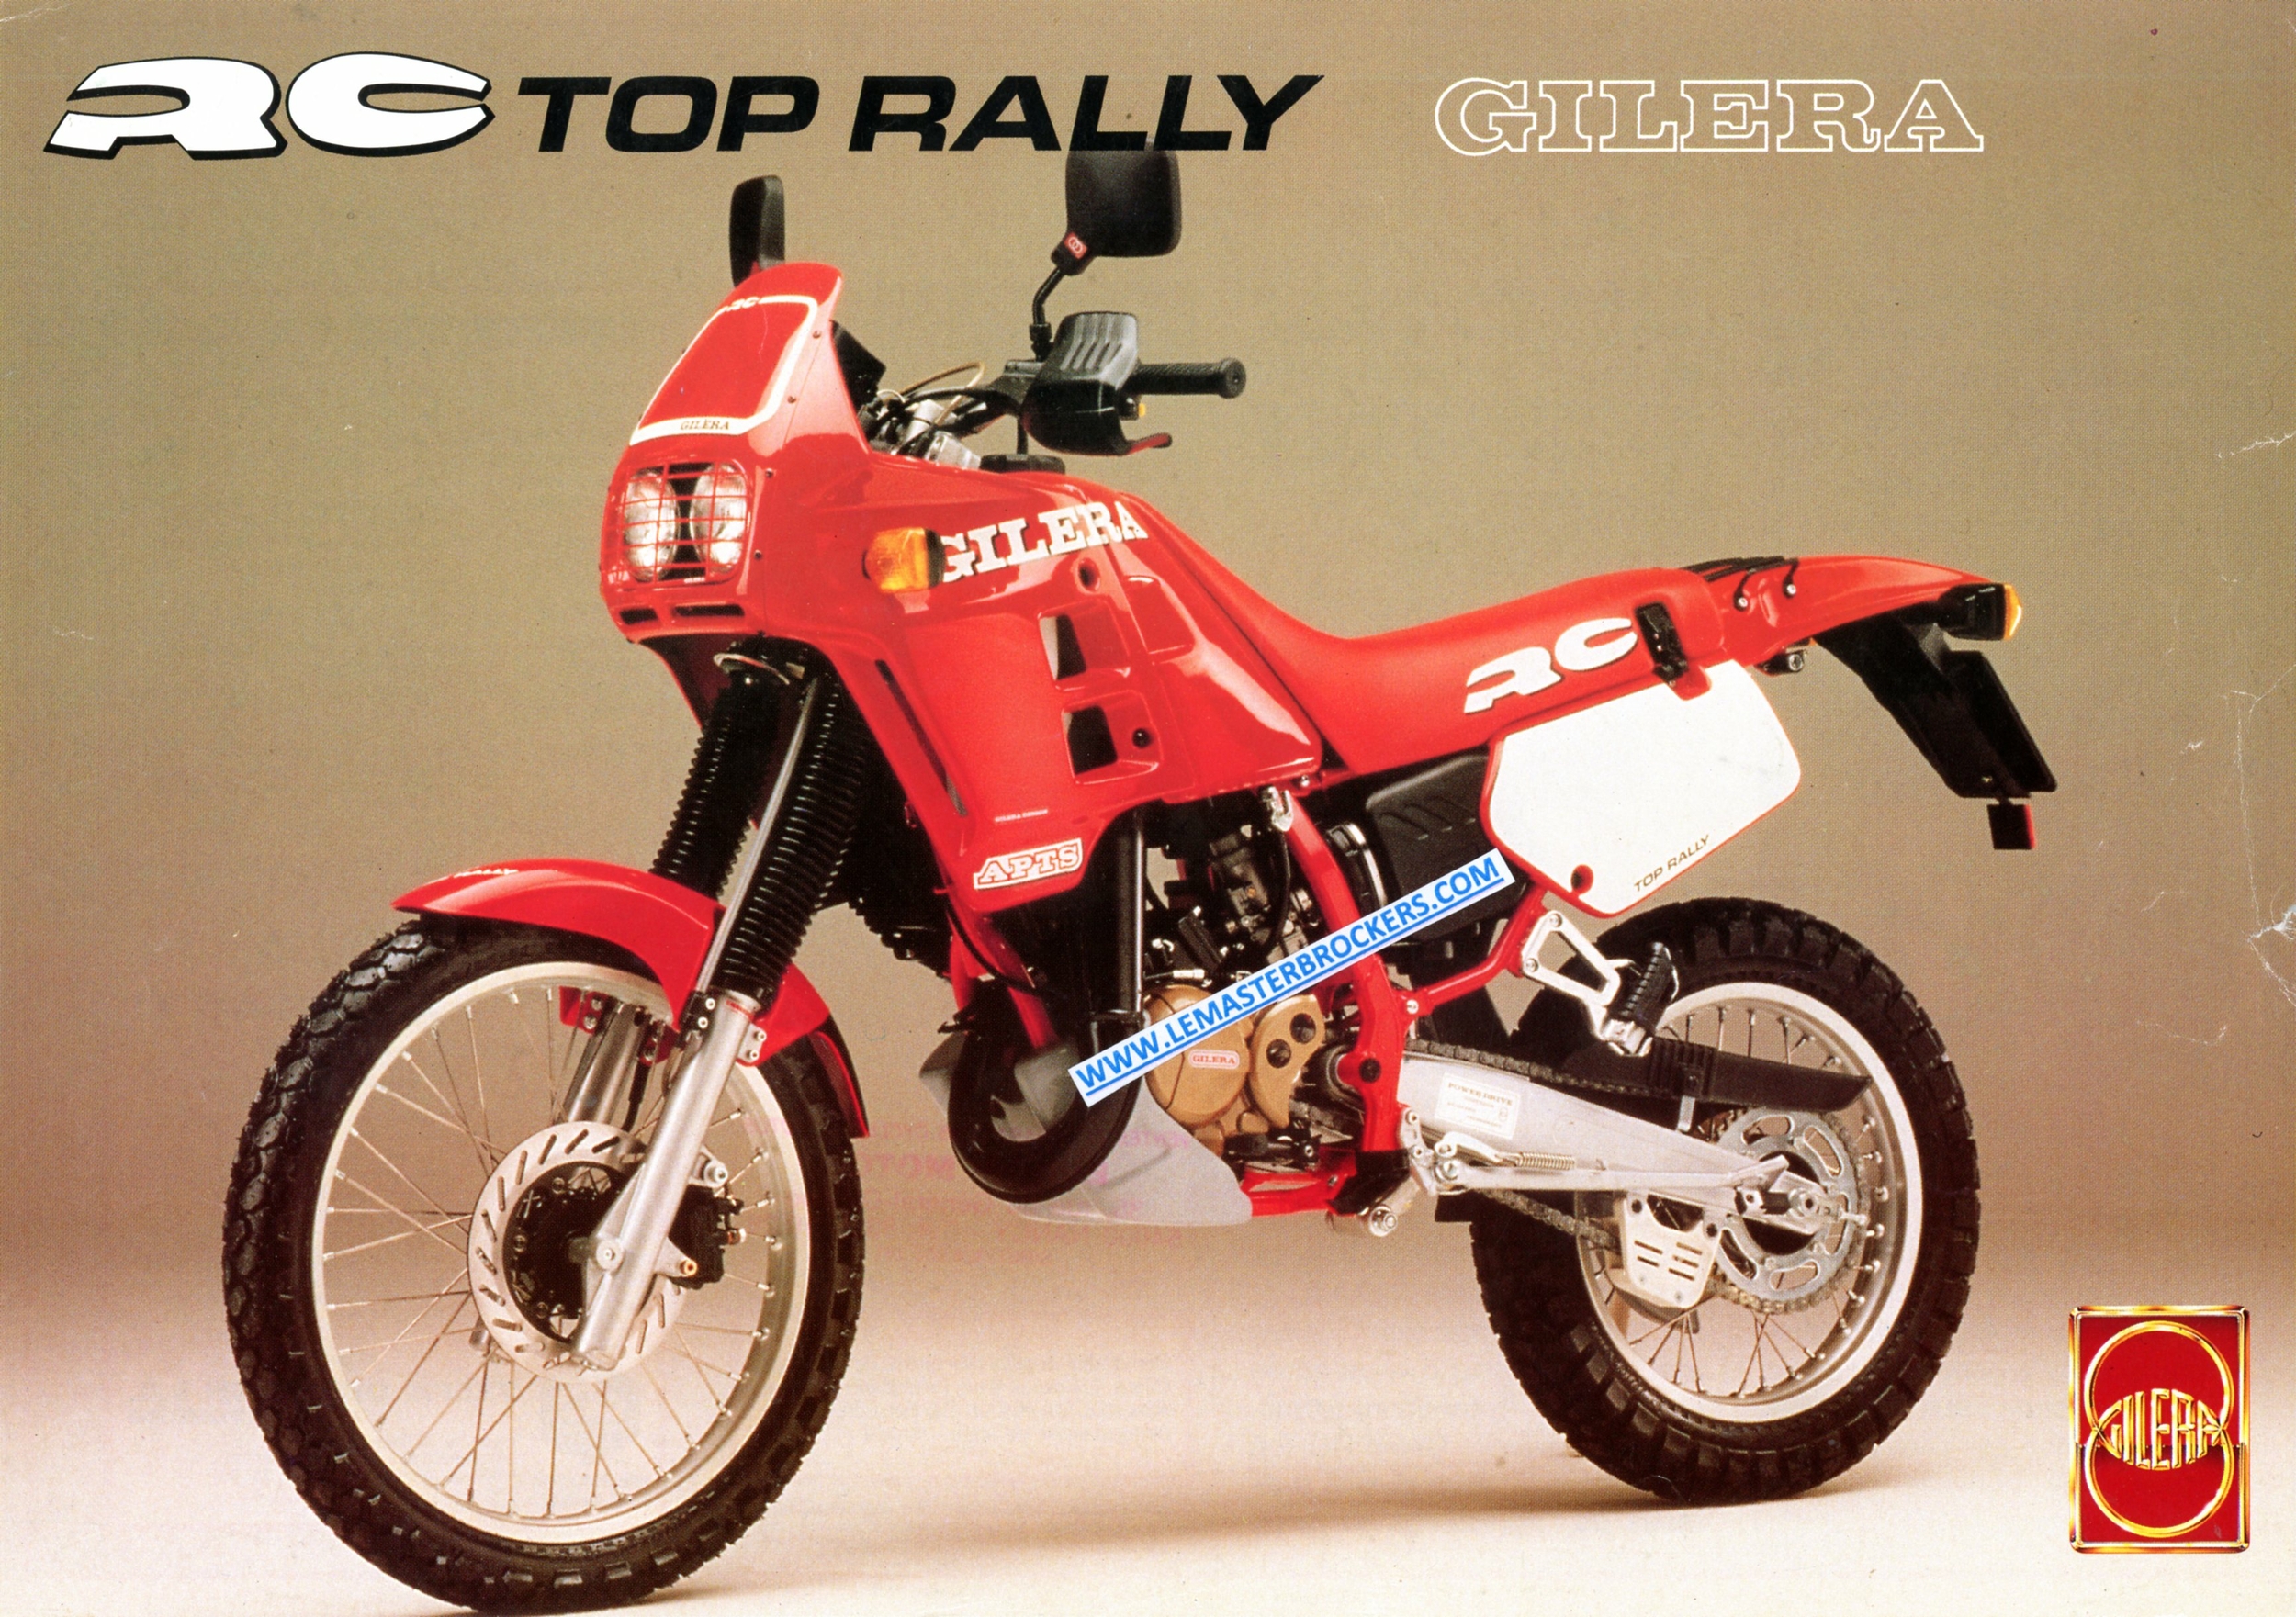 BROCHURE-MOTO-GILERA-RC-TOP-RALLY-125-RC125-LEMASTERBROCKERS-BROCHURE-MOTORCYCLES